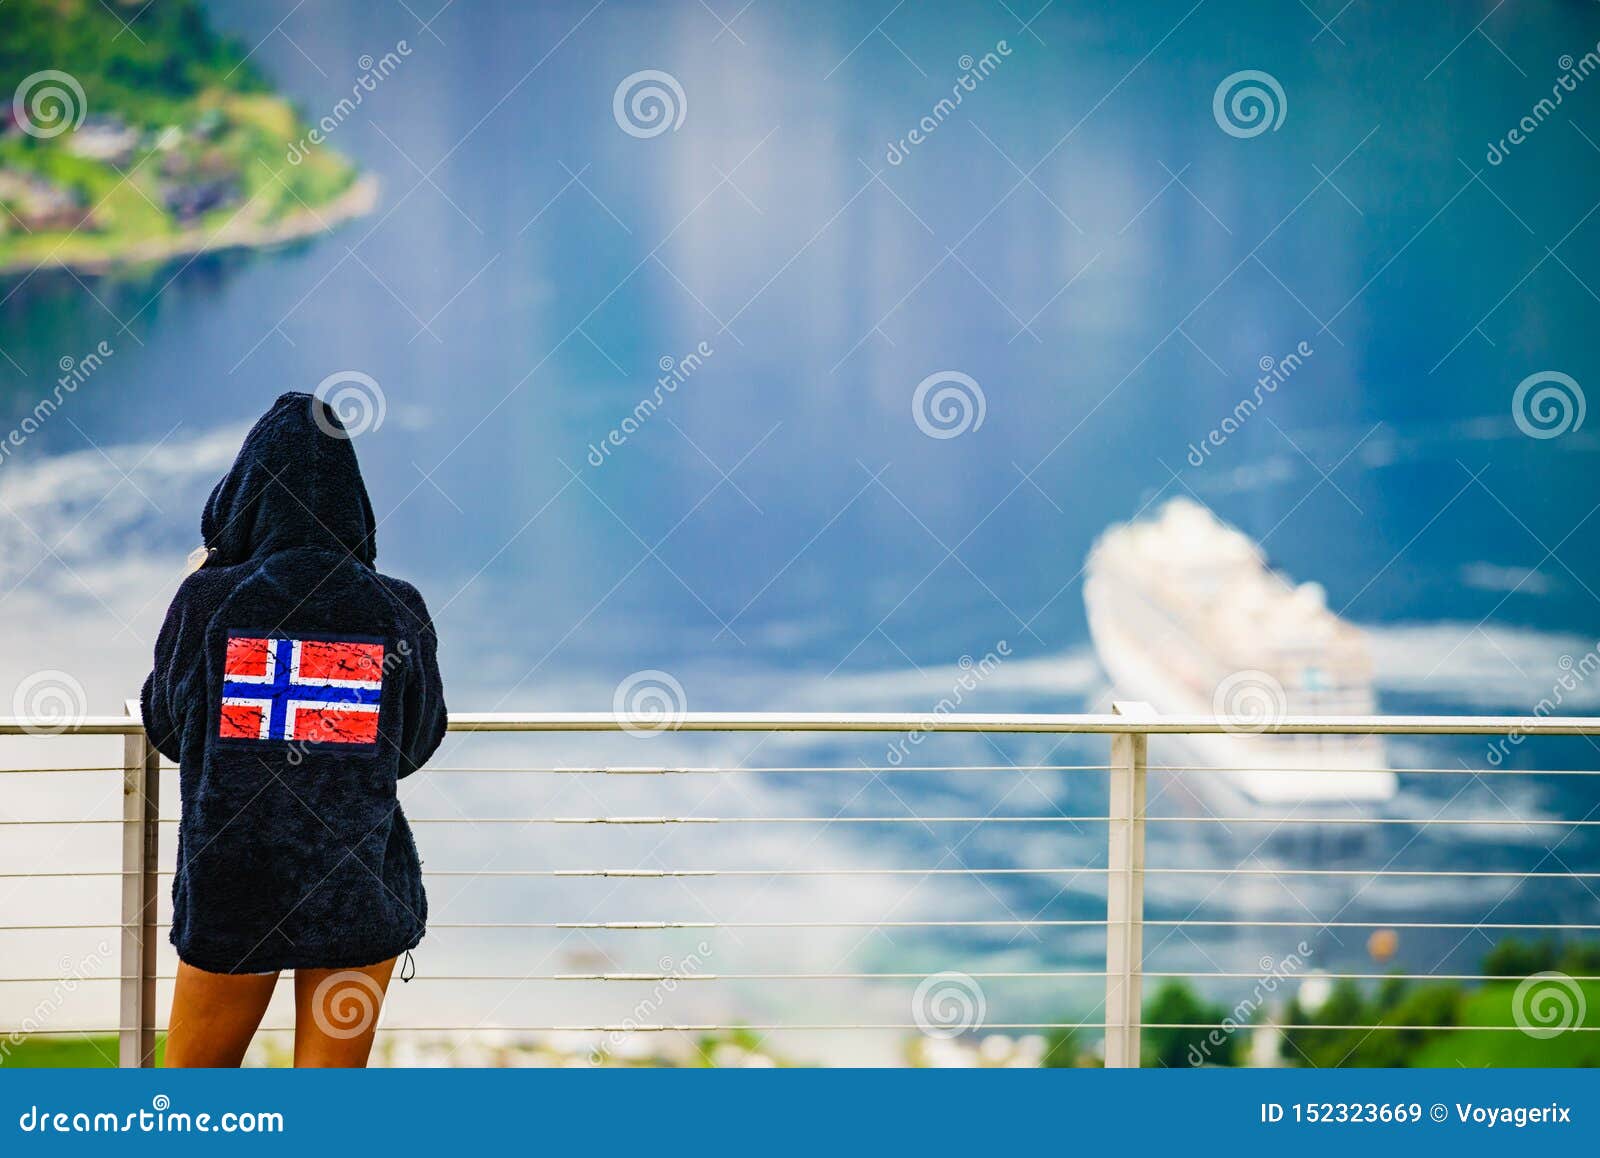 Tourist Over Fjord Wearing Norwegian Flag Clothing Stock Image - Image ...